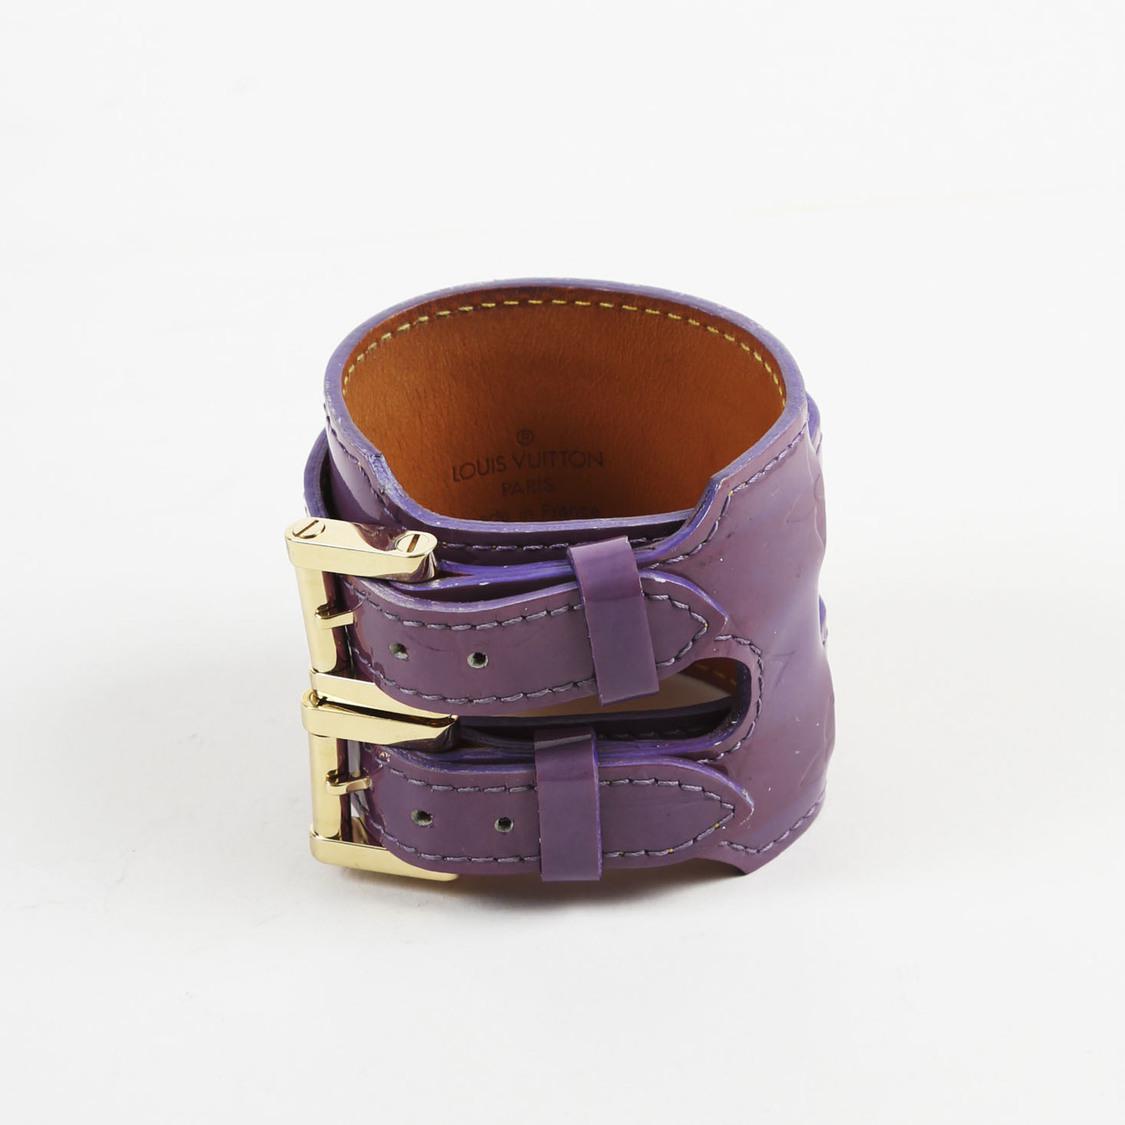 Lyst - Louis Vuitton Purple Monogram Vernis Double Buckle Cuff Bracelet in Purple